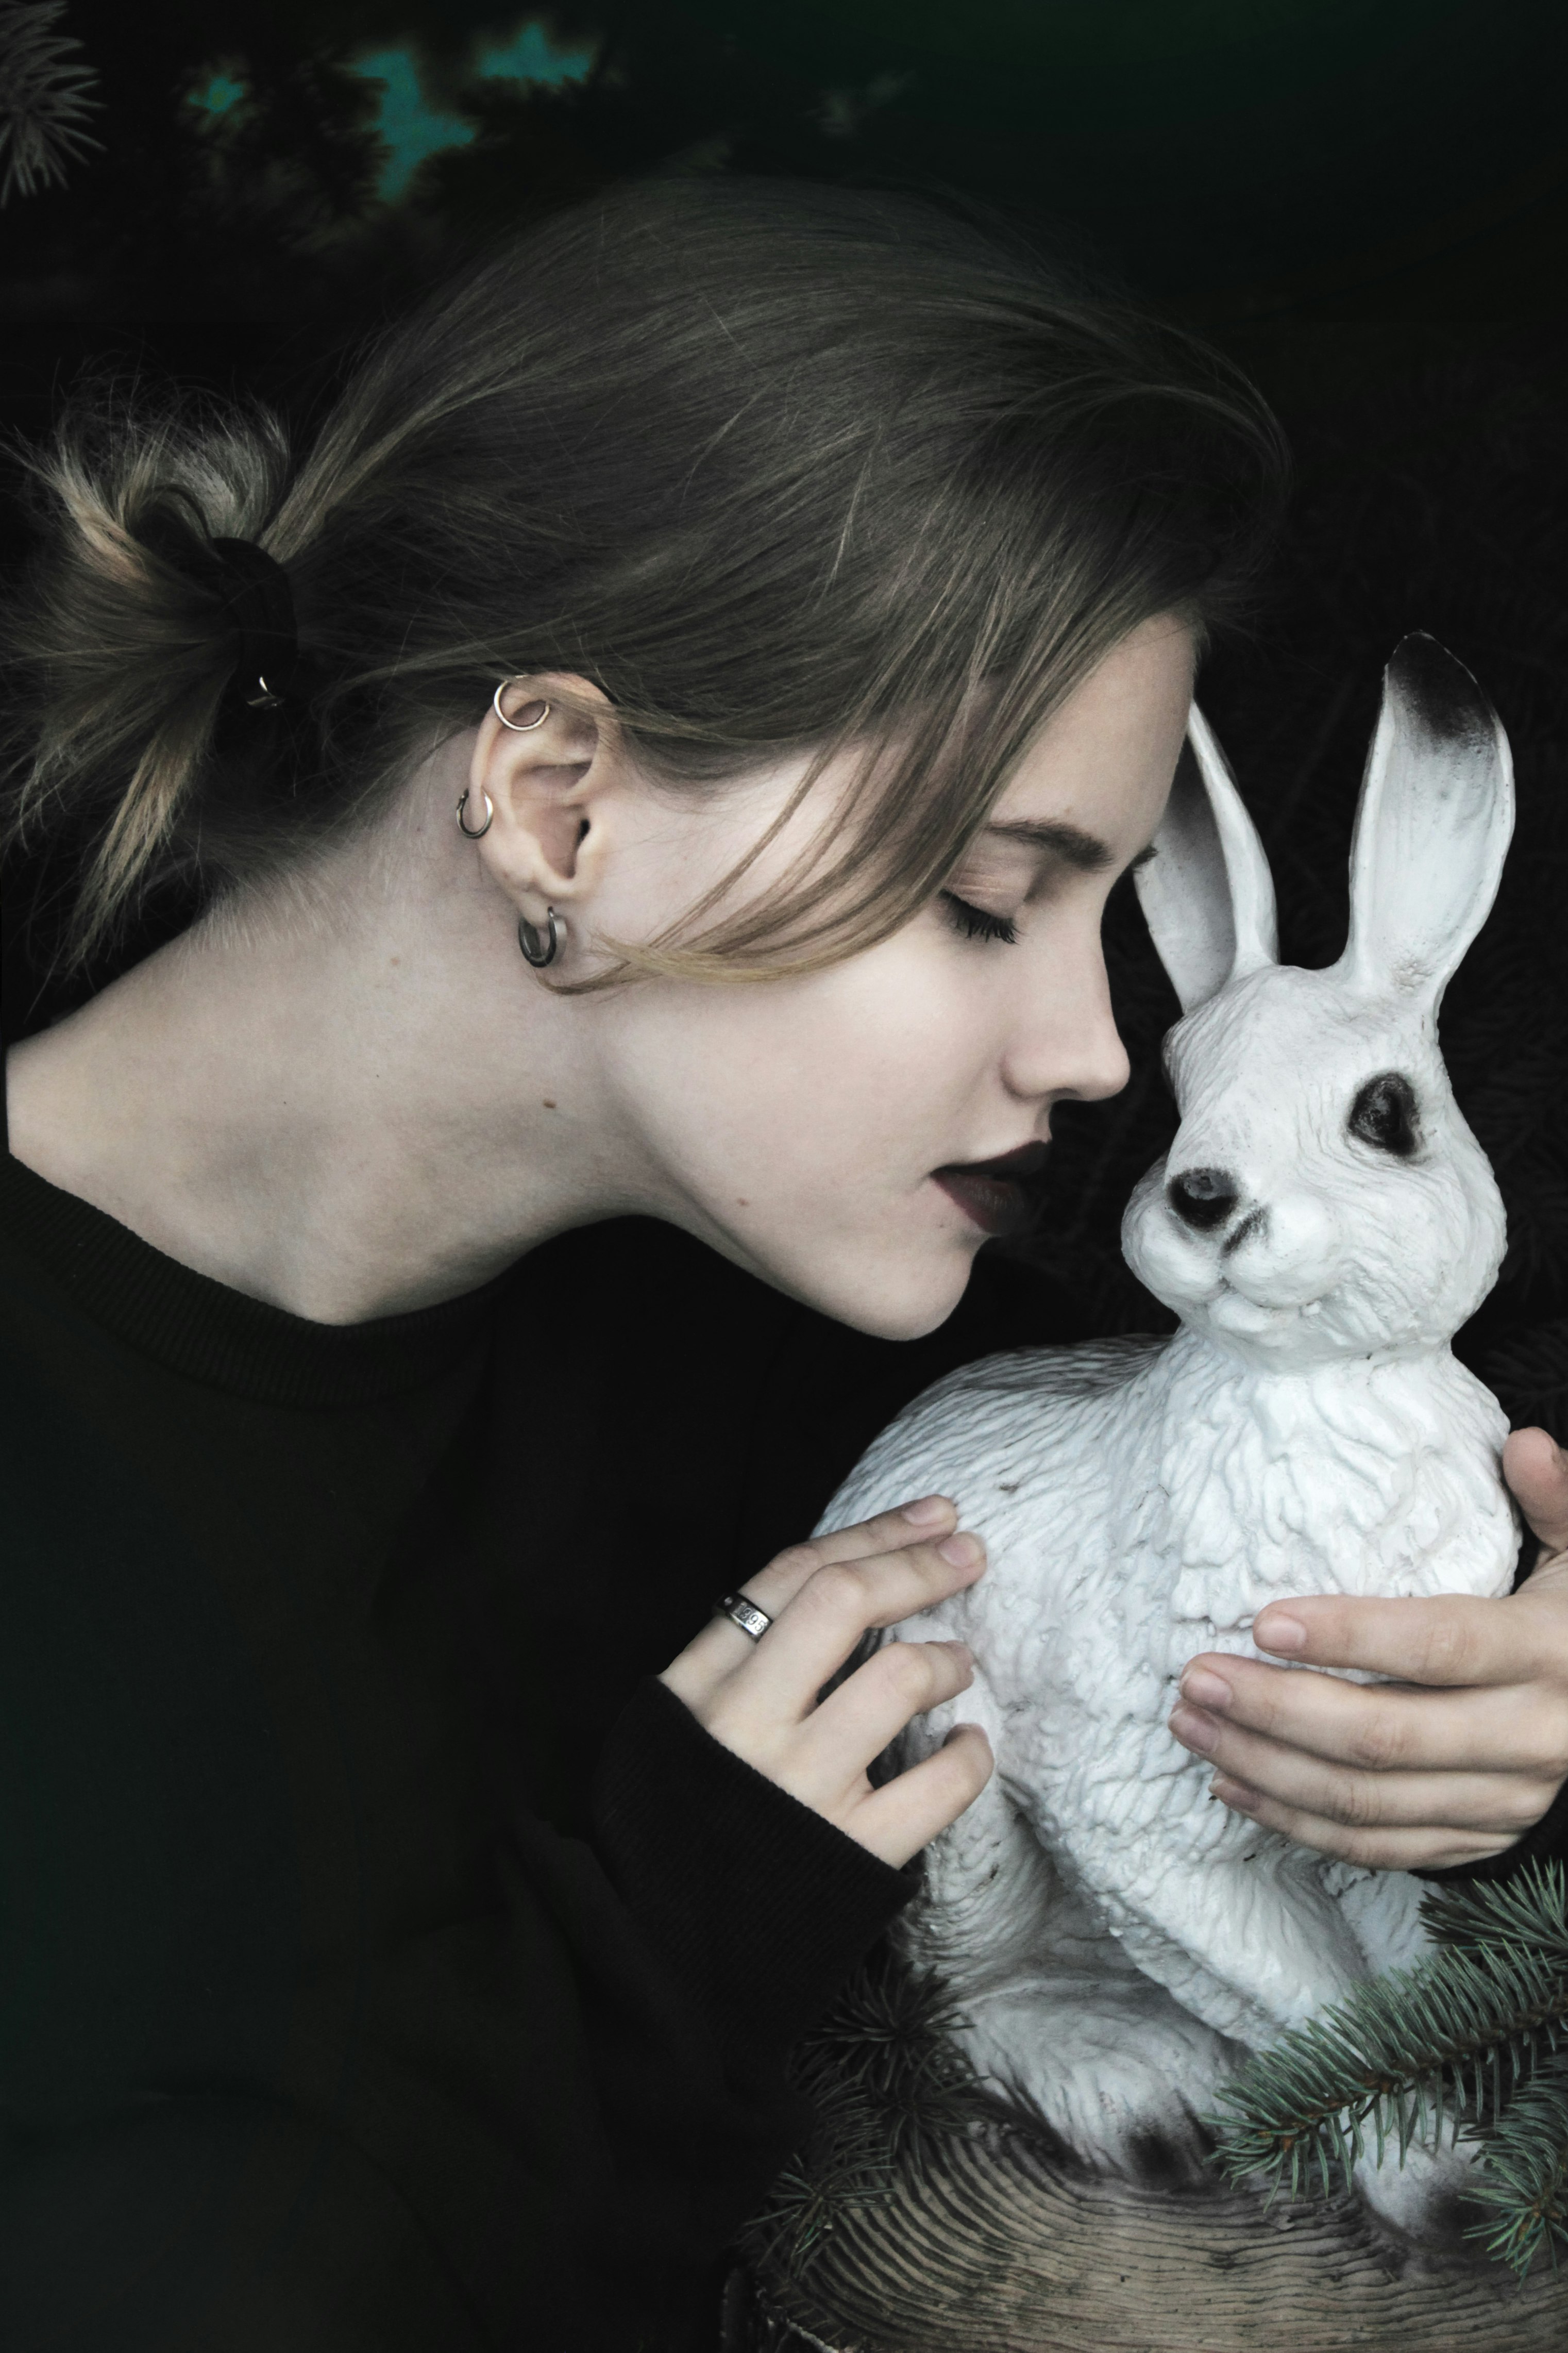 woman hugging white rabbit figurine